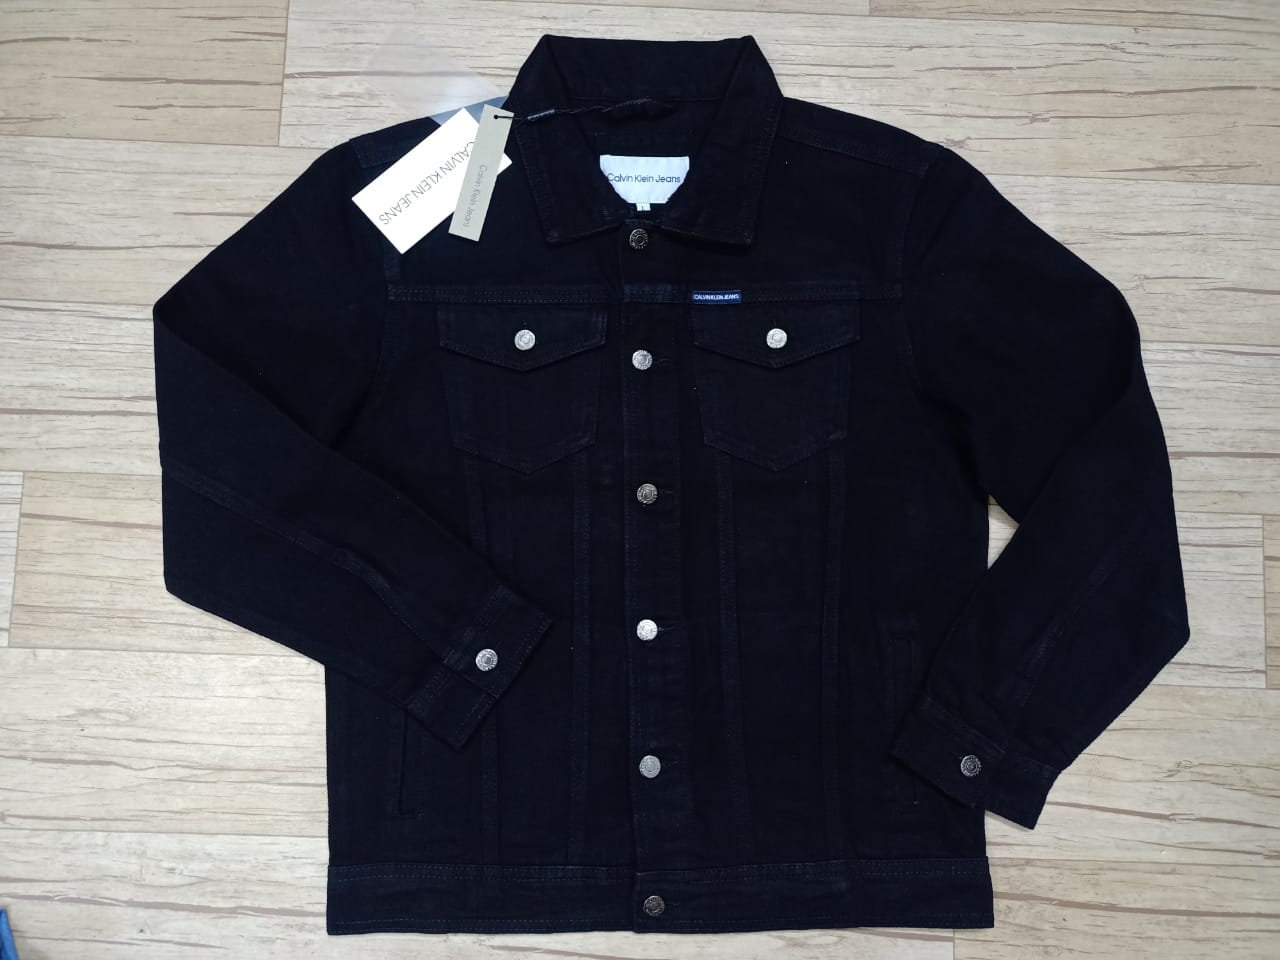 Imported Super Premium Denim Jacket (DJK01) - Black